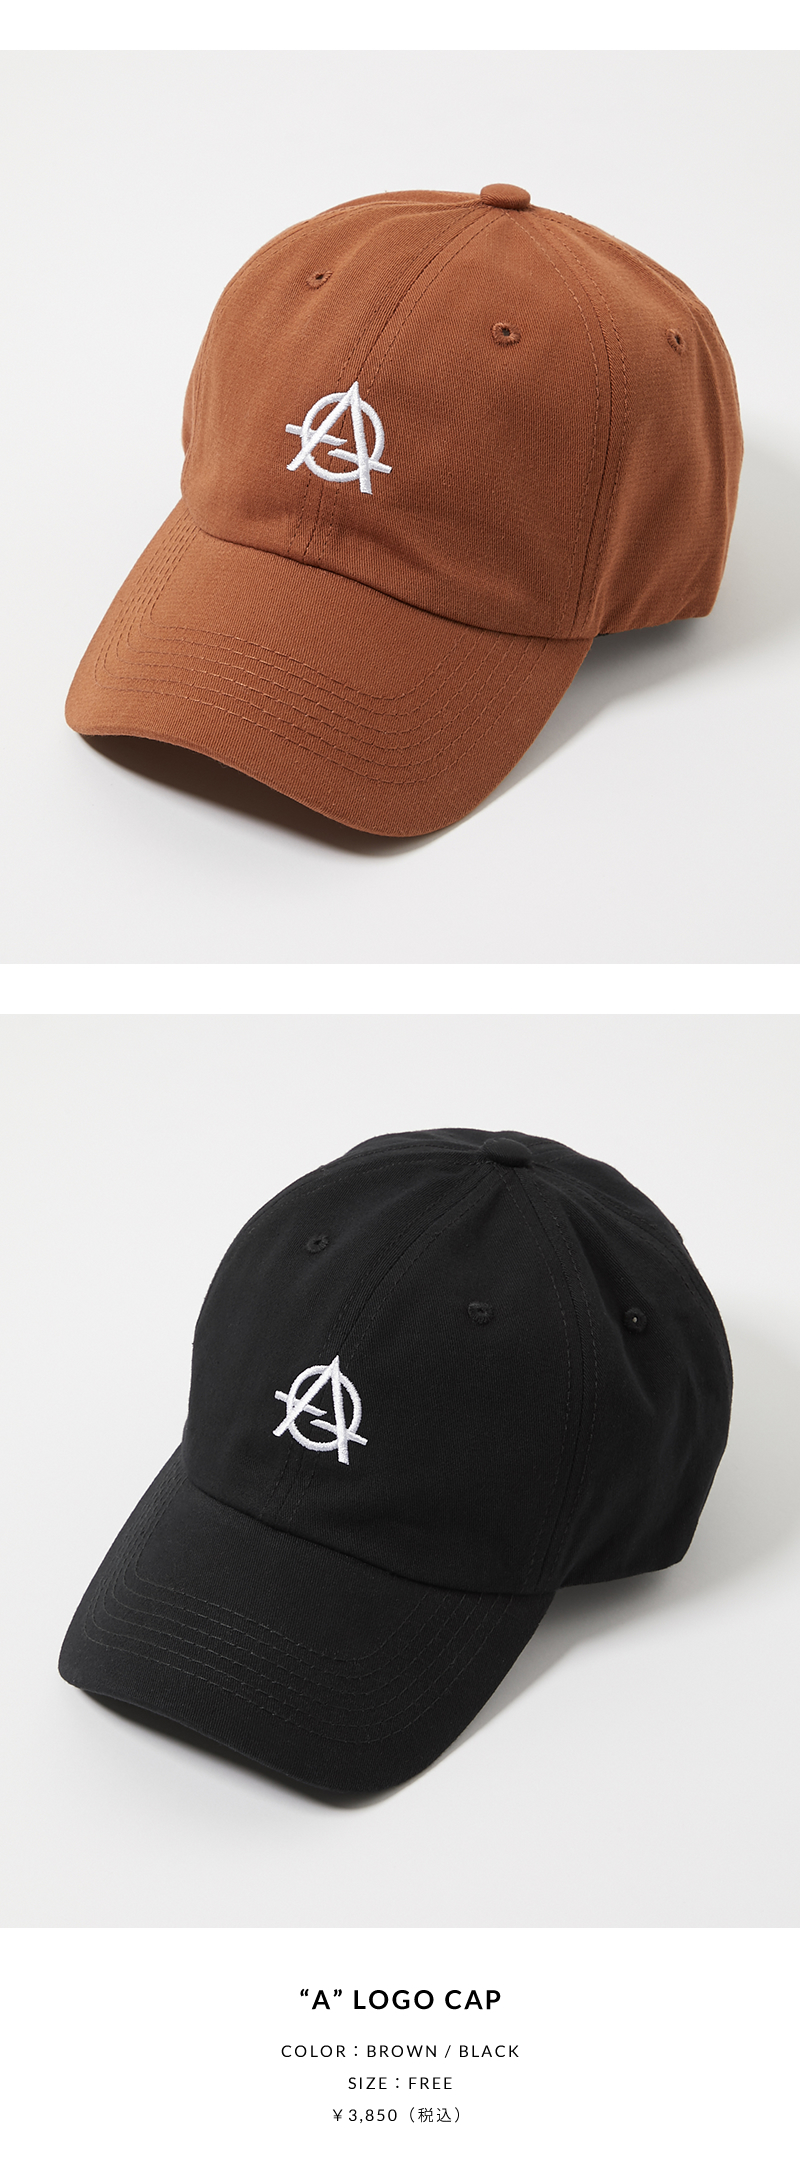 "A" LOGO CAP